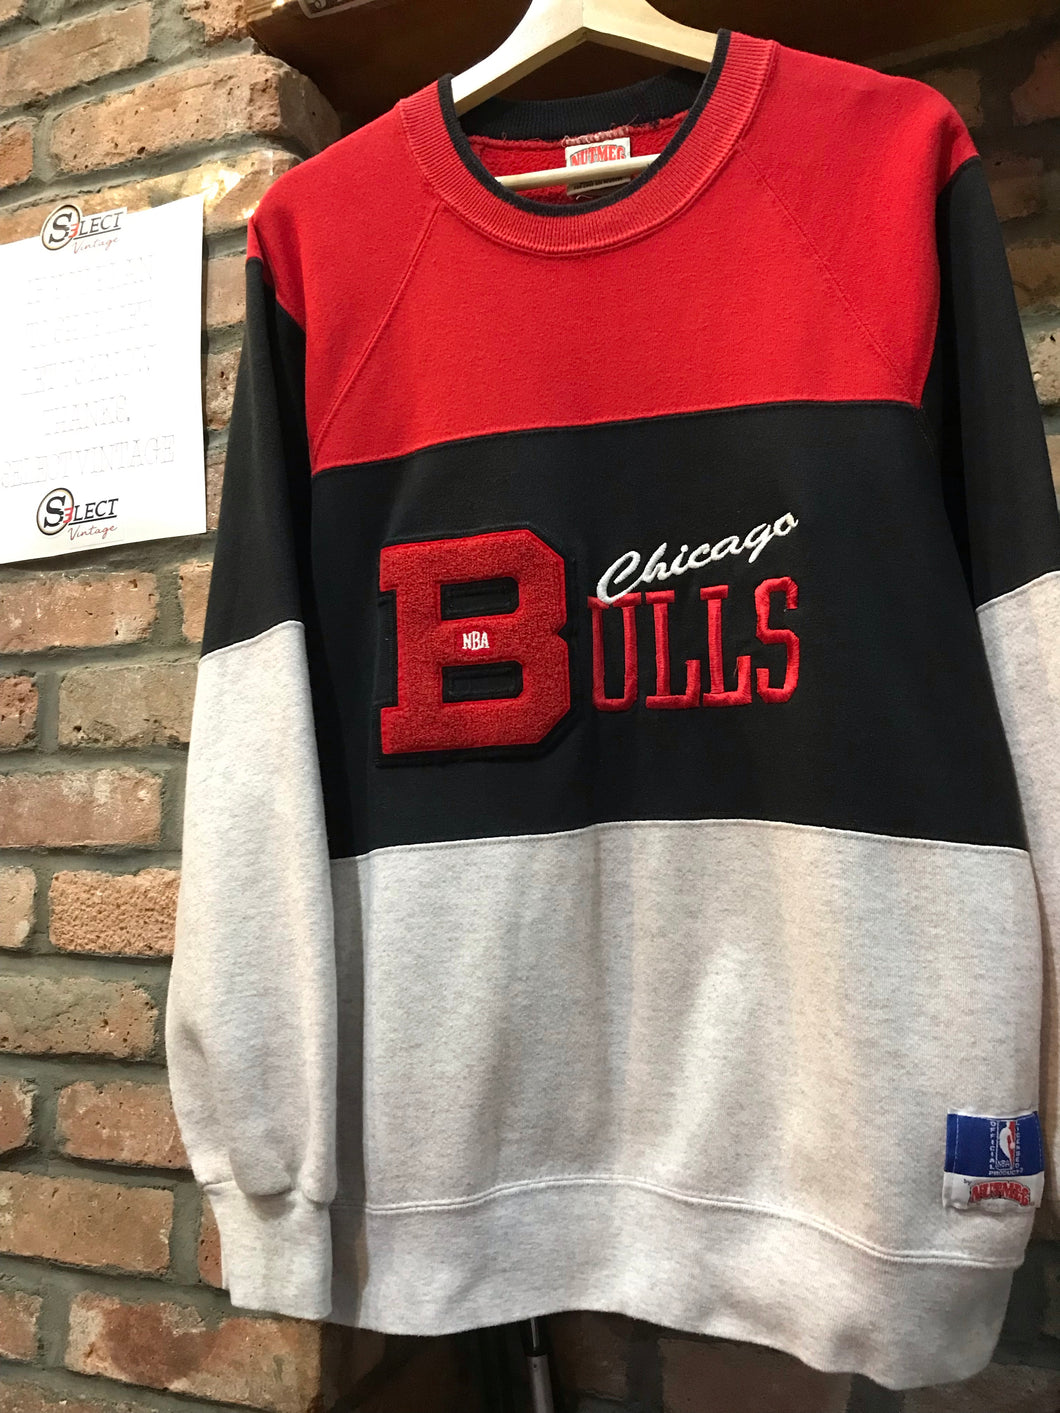 bulls crewneck sweatshirt